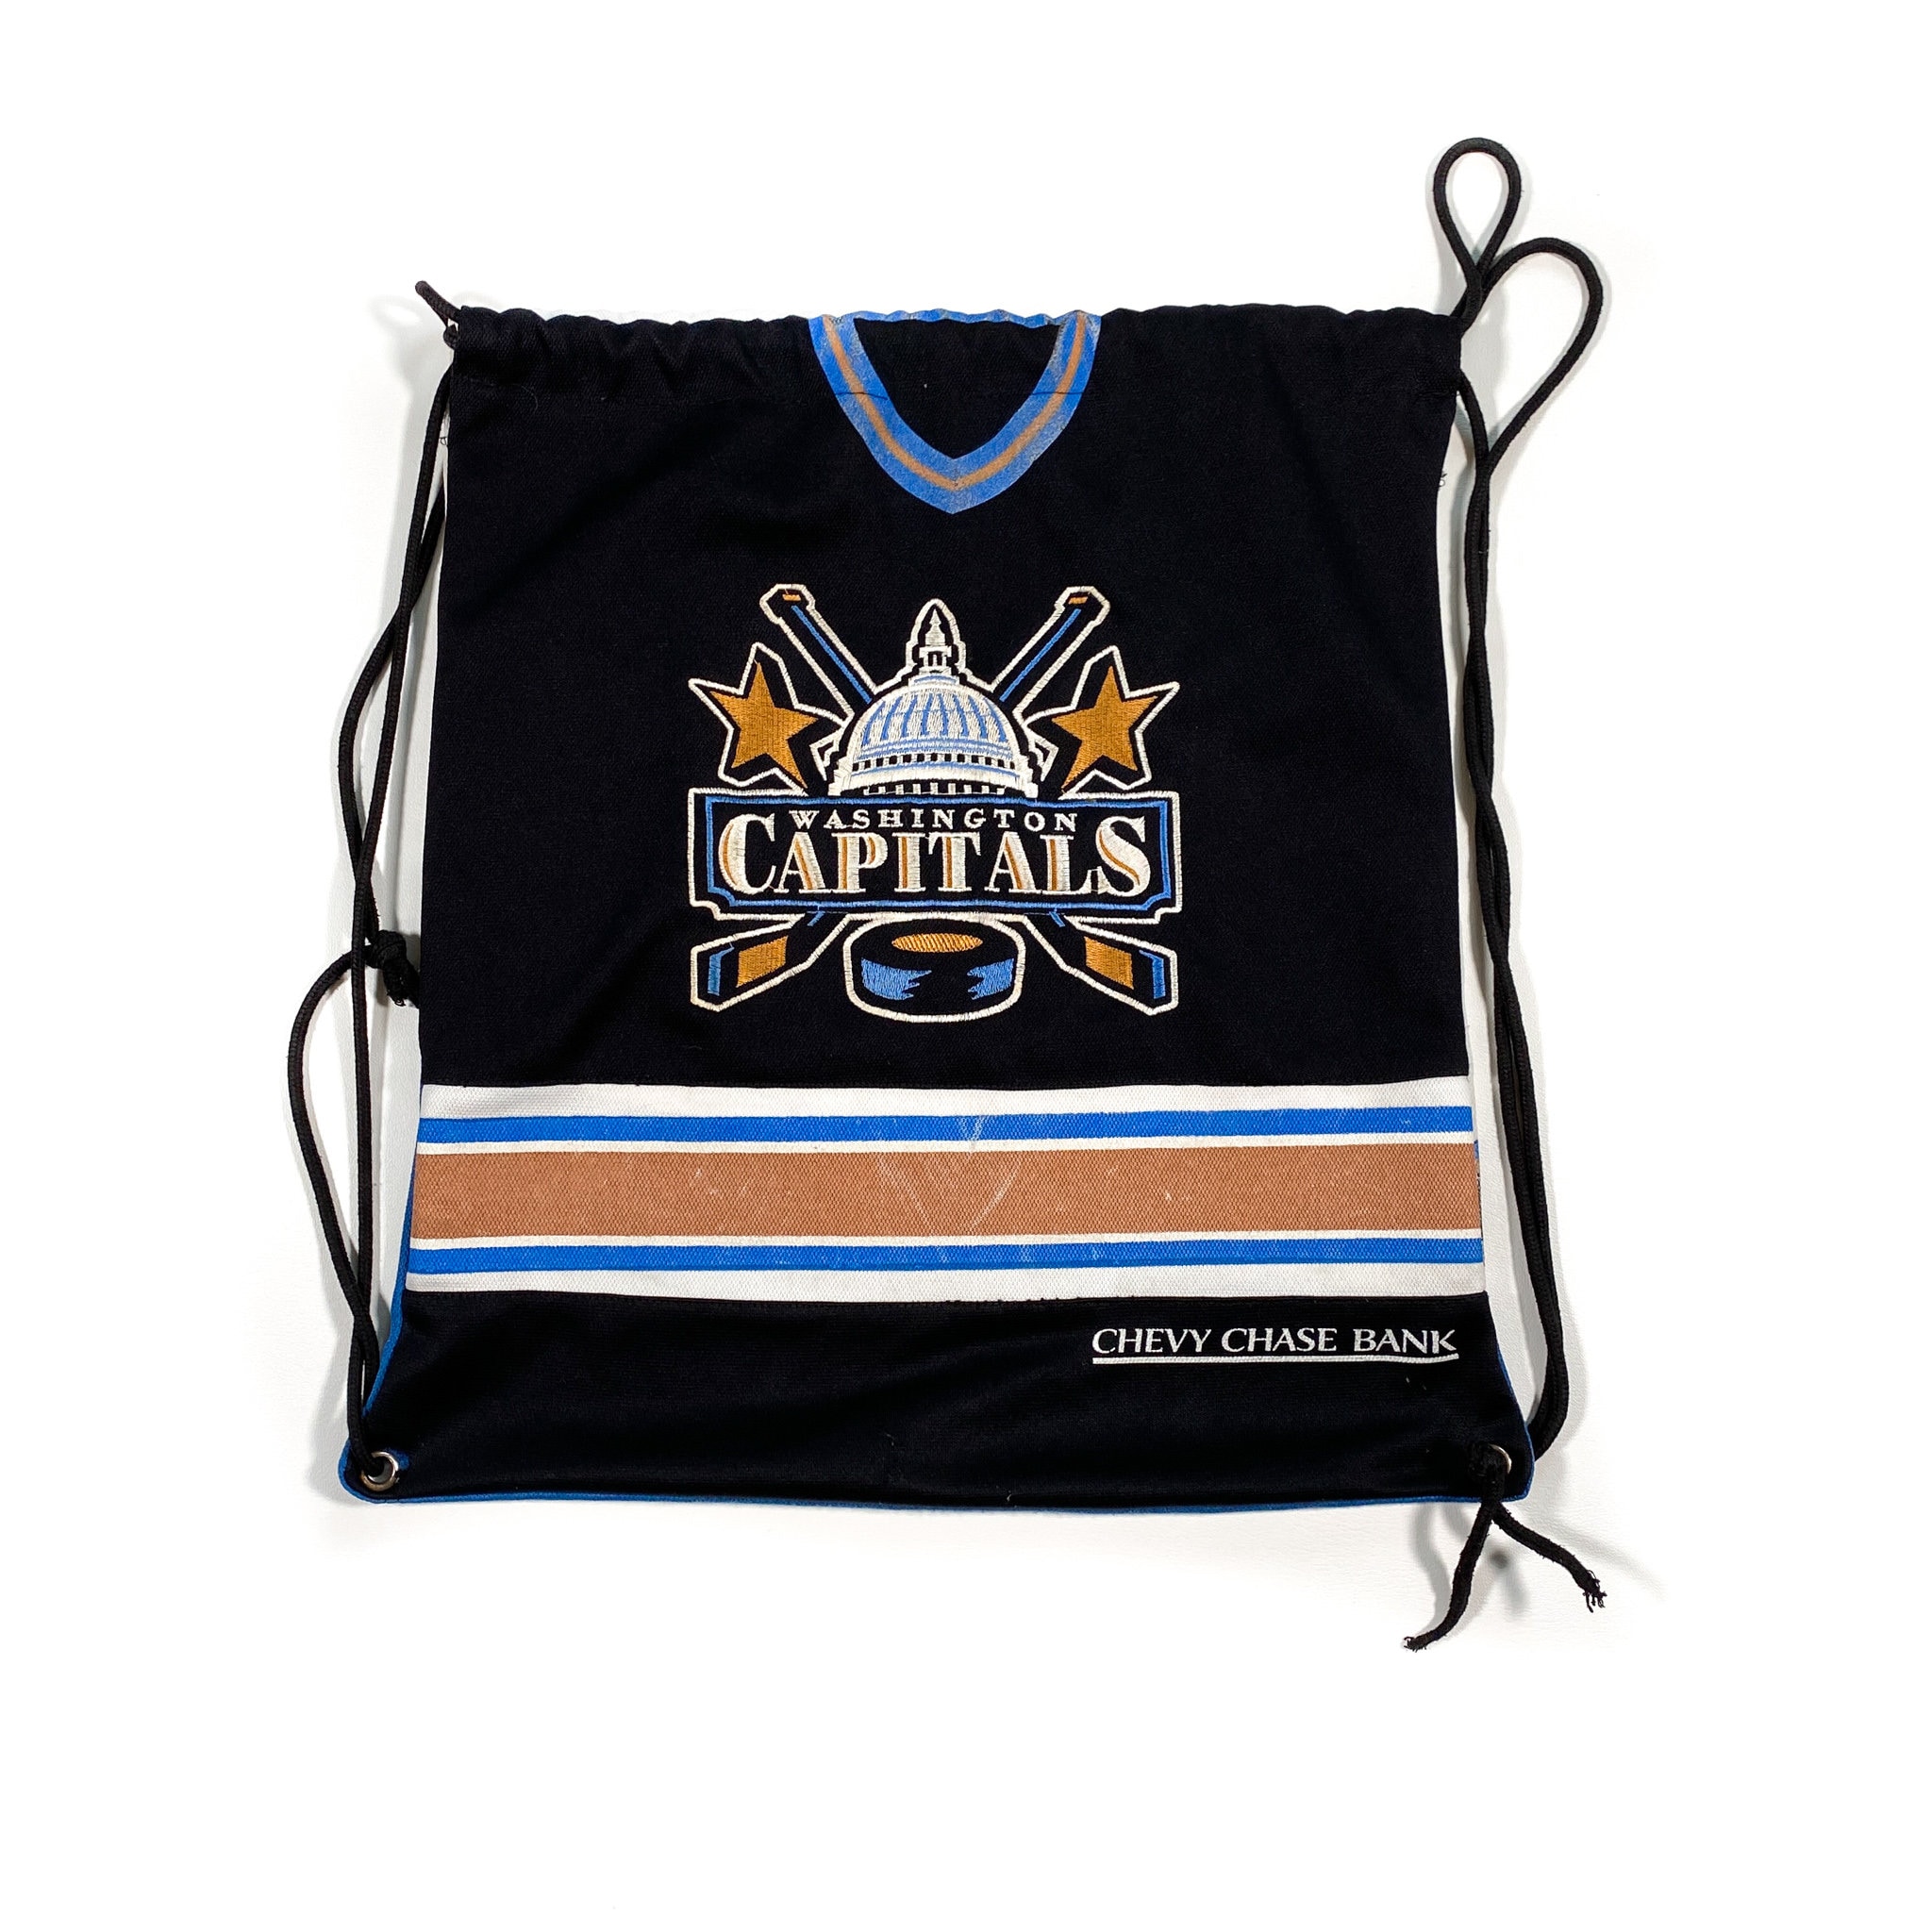 Vintage Bauer “Labatt Blue” Hockey Bag